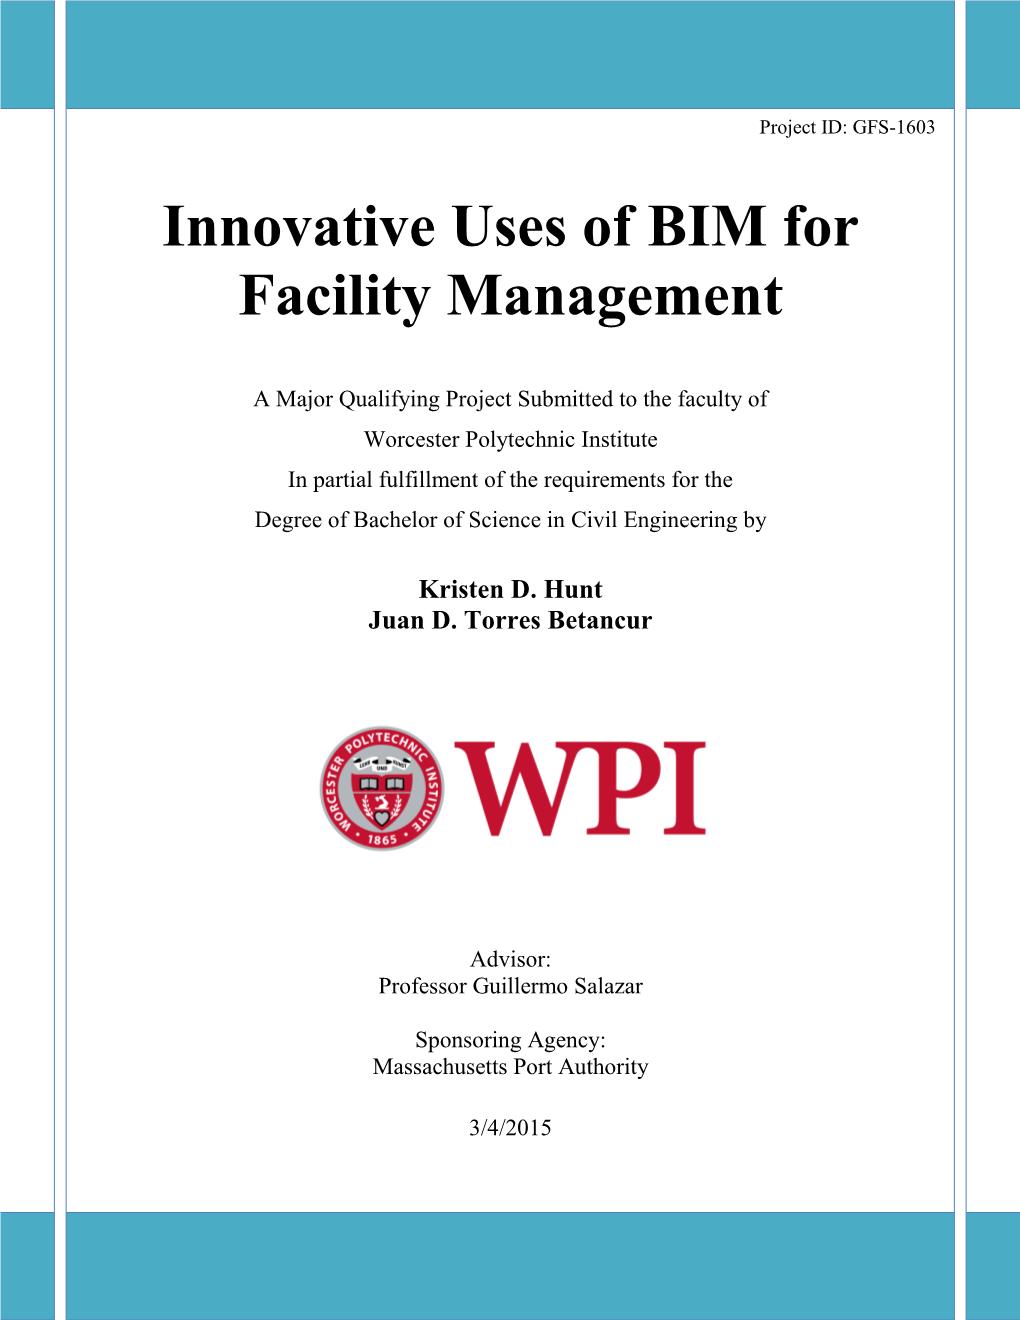 Innovative Uses of BIM for Facility Management